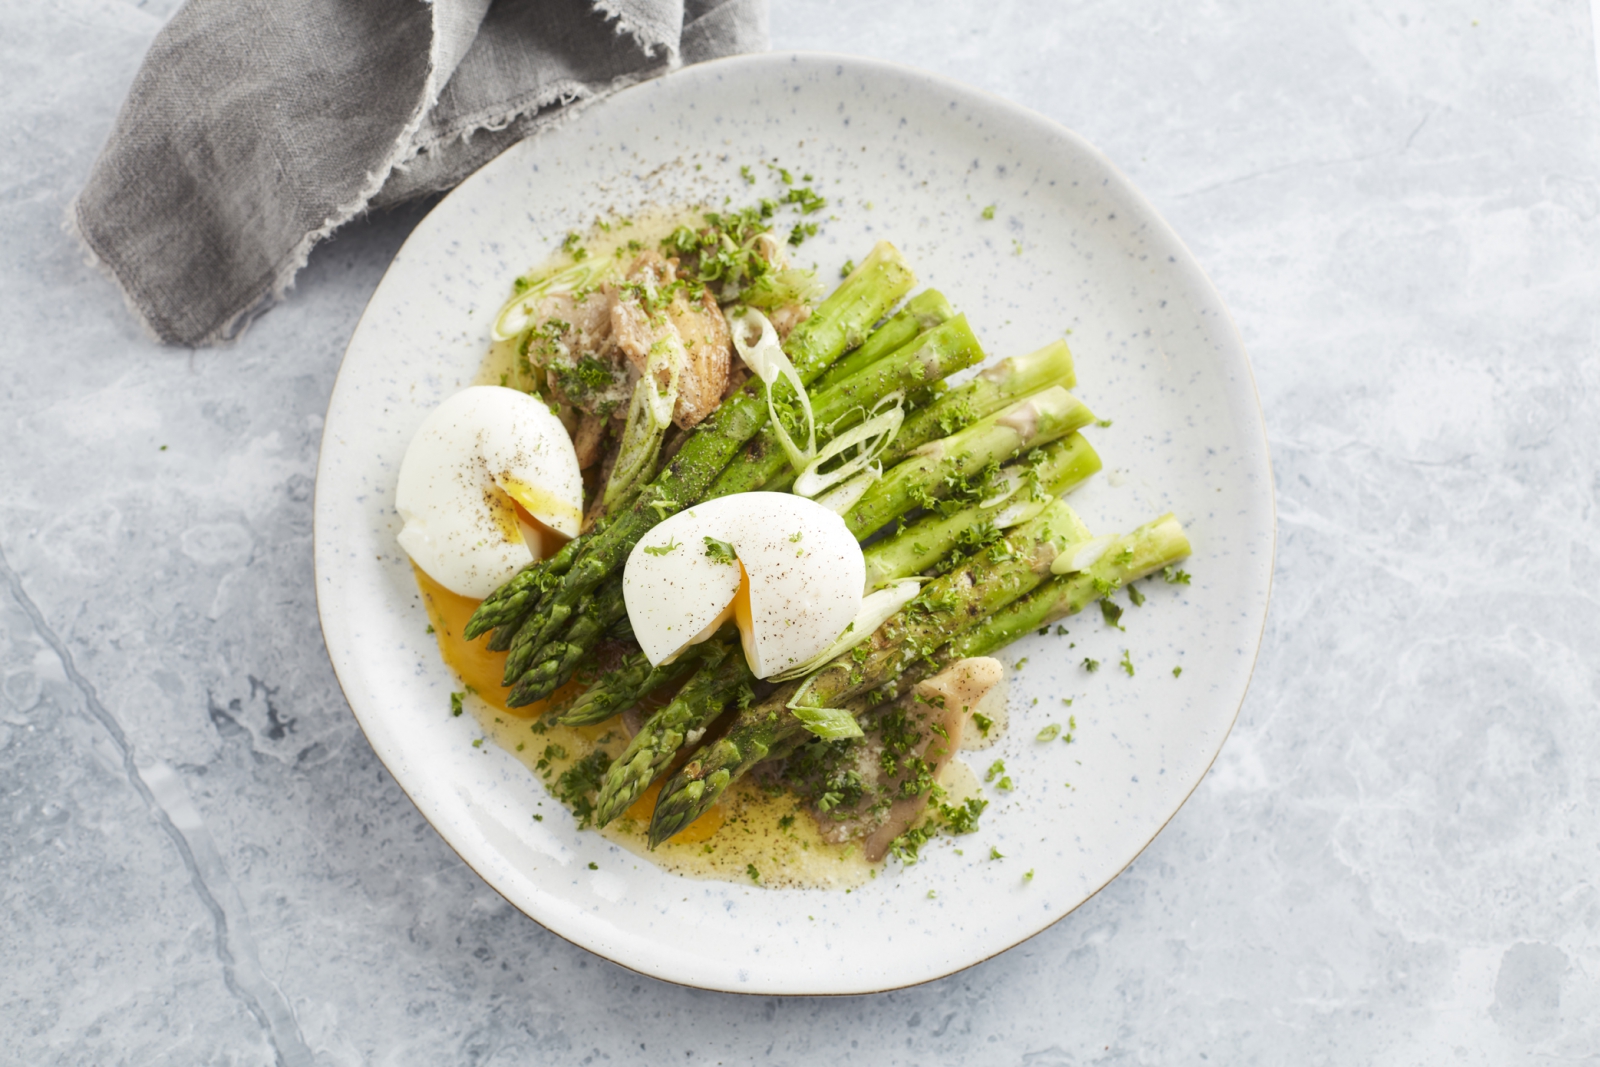 Go Keto Challenge: Asparagus à la flamande with Baked Oyster Mushrooms